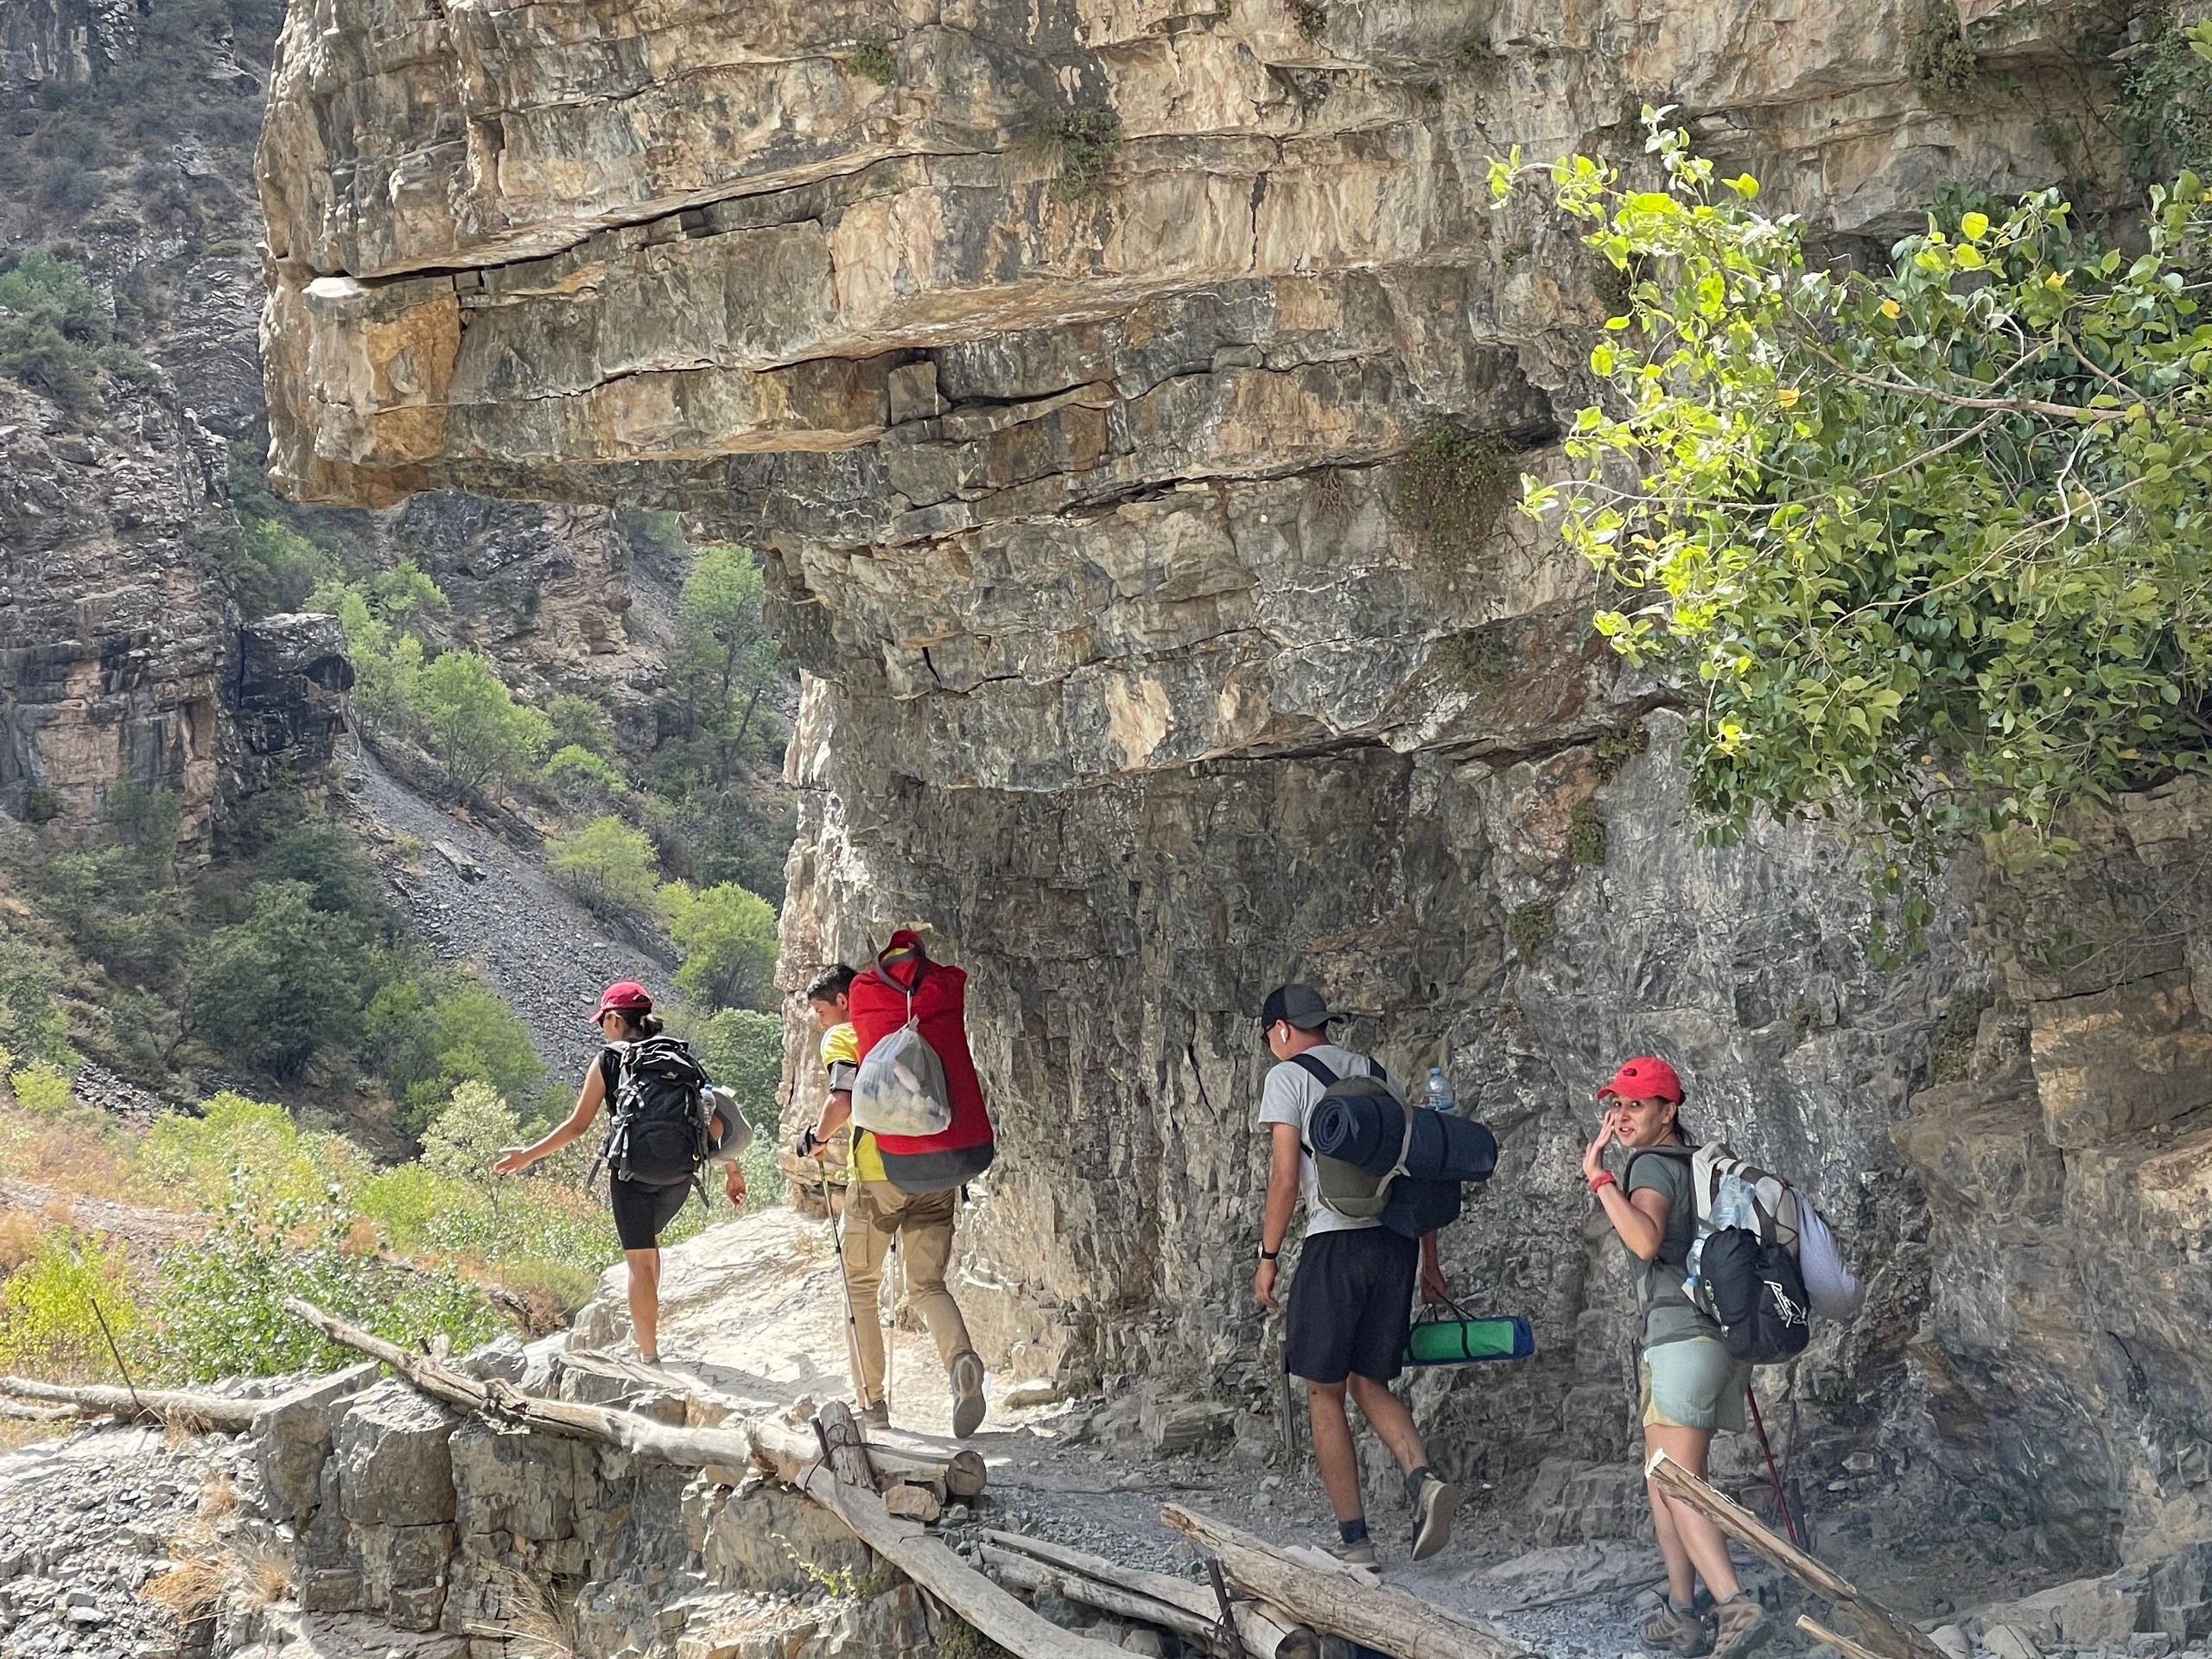 Group of hikers walking along the rockwall in Uzbekistan